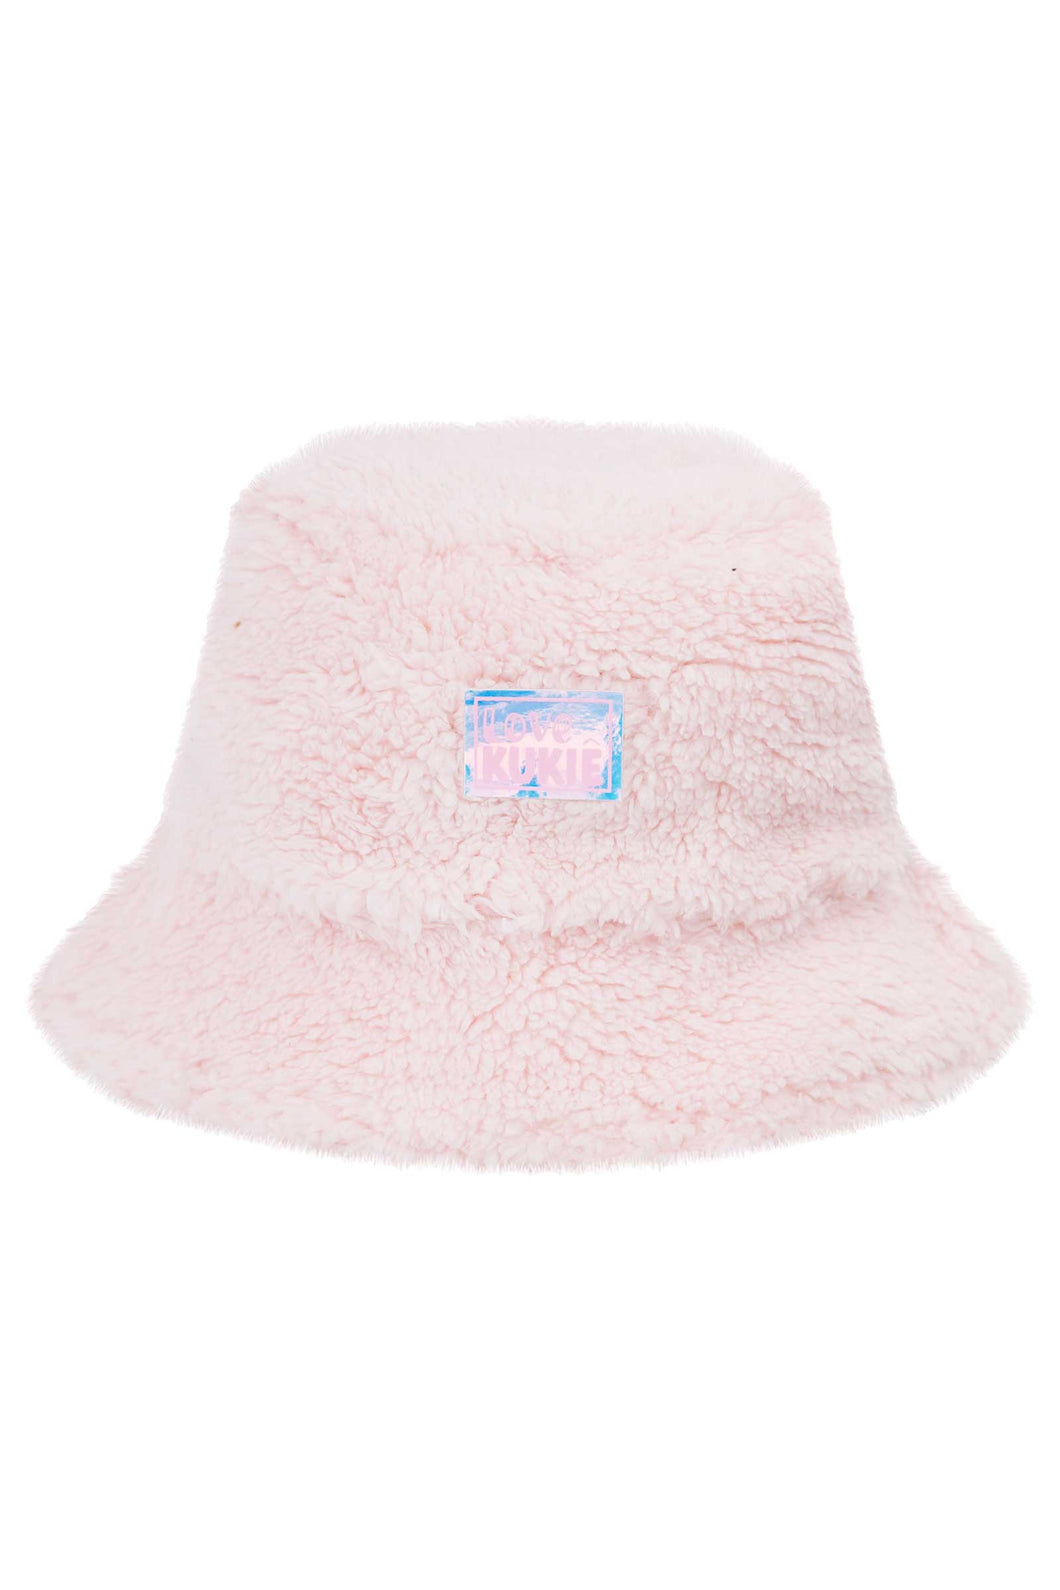 Gorro Bucket polar rosa baby